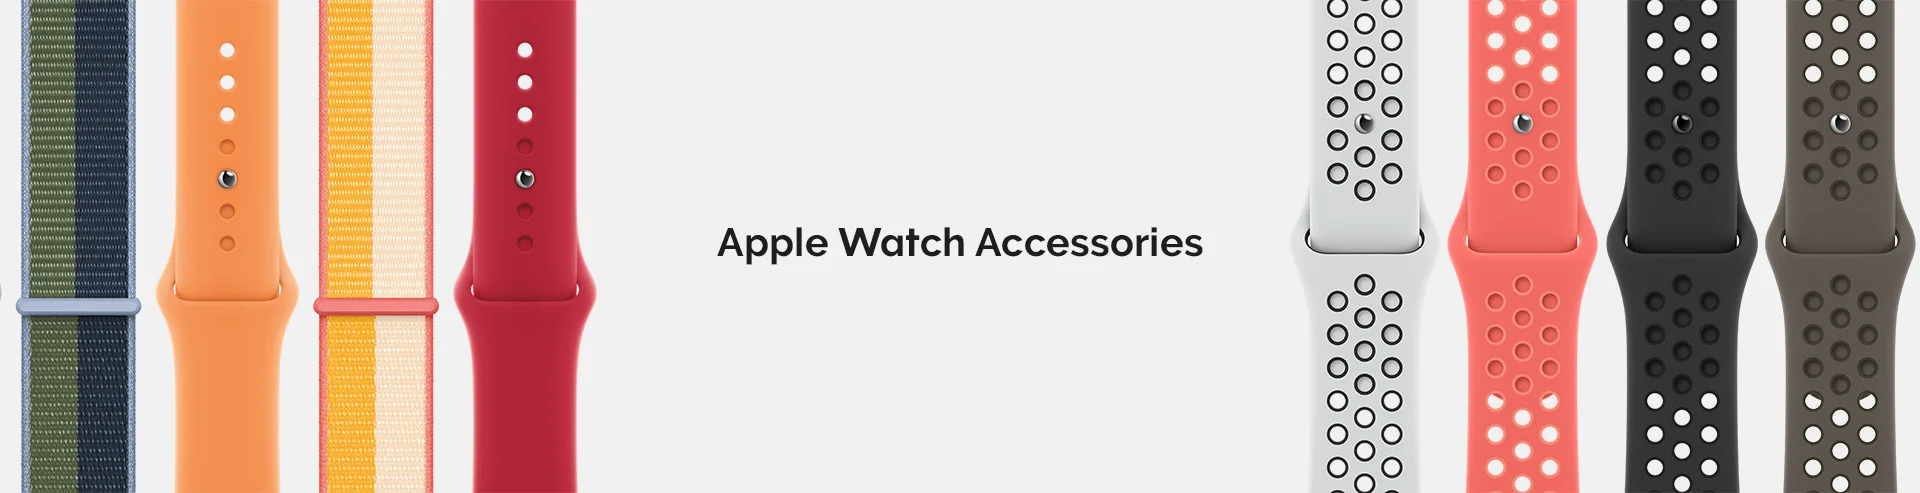 Full-Width-Large-Apple-Watch-Accessories-Desktop.webp